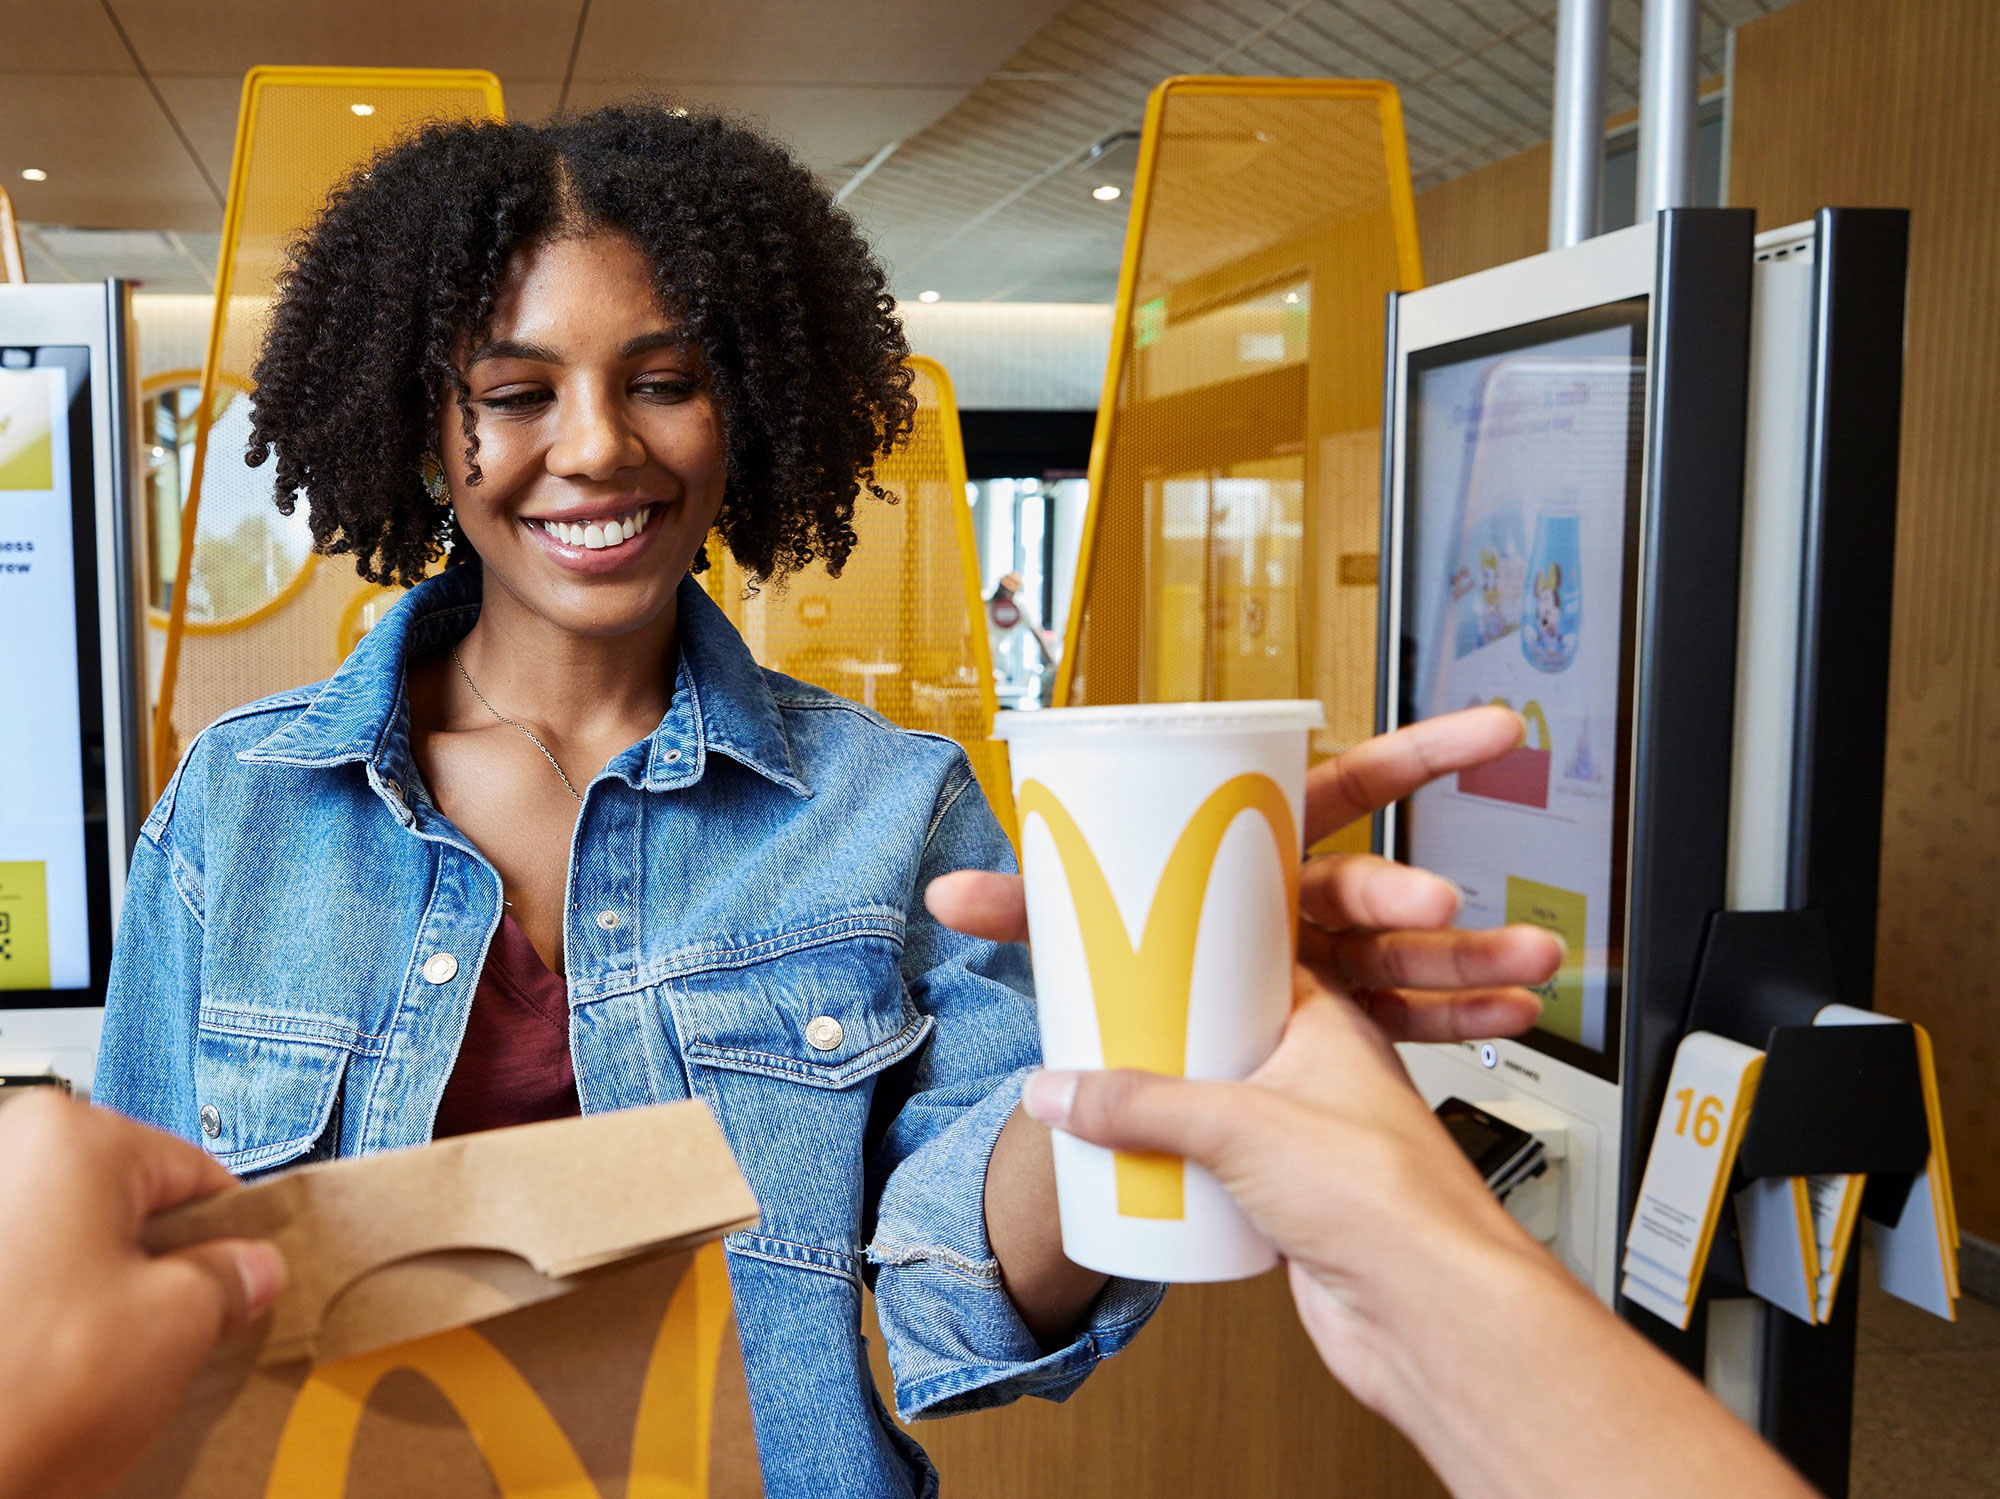 McDonald's Restaurant - Happy Customer